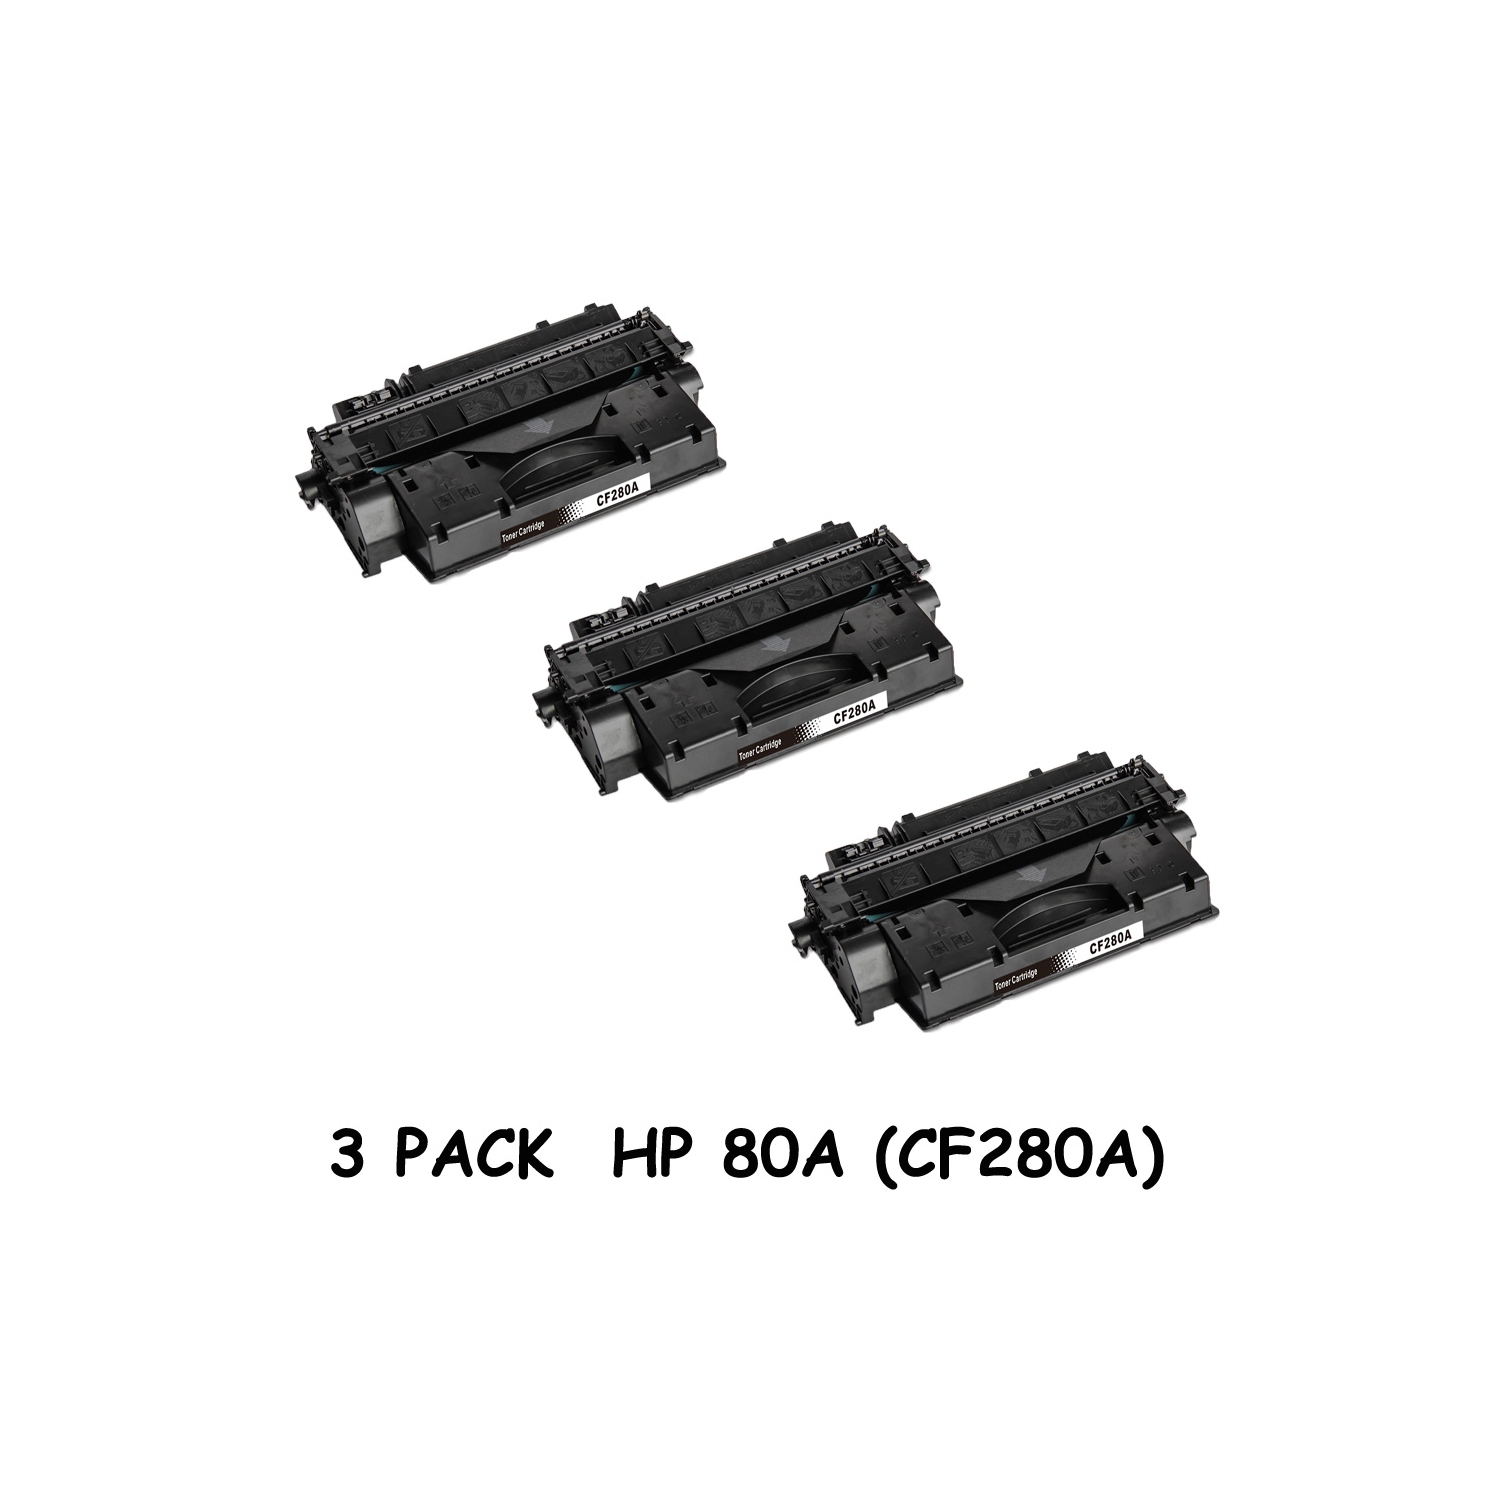 Bestoner™ 3 PK HP 80A (CF280A)/hp80a/80a/HP80A/80A/CF280A/cf280a/cf280/280/80A/80 HP LaserJet Pro M401 M425d